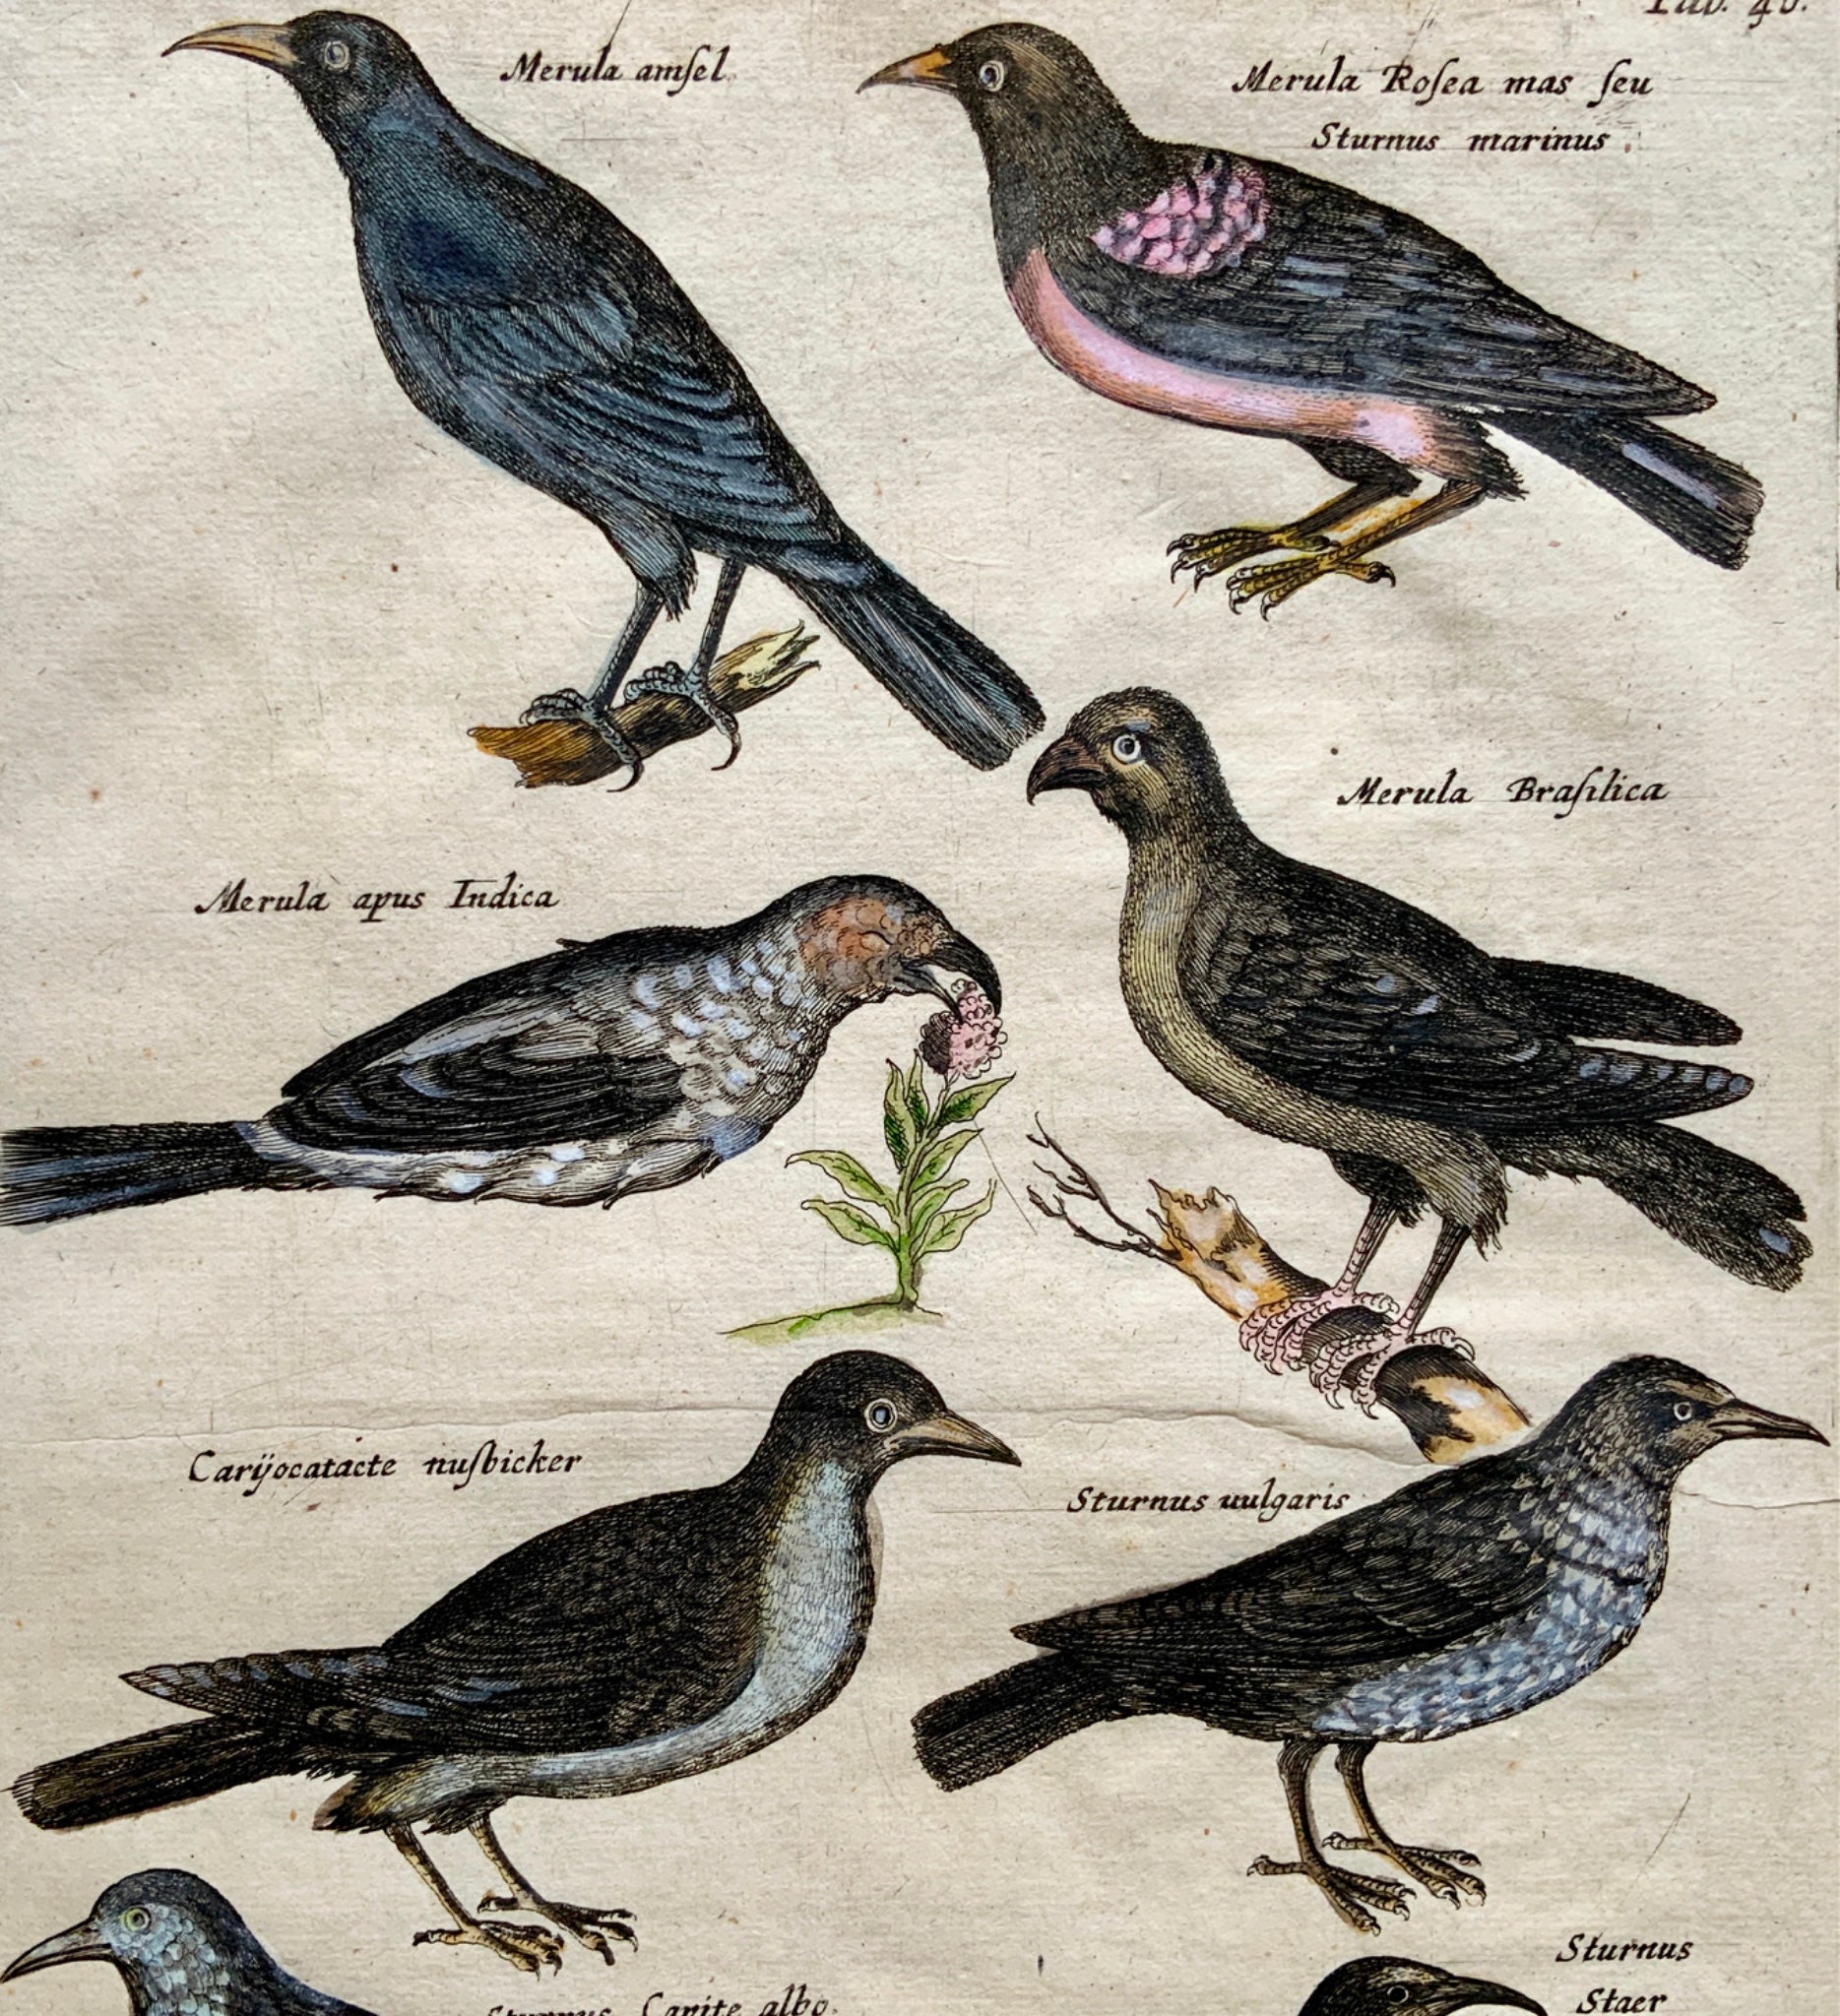 1657 Mat. Merian - Ornithology: Starlings - Folio hand coloured engraving